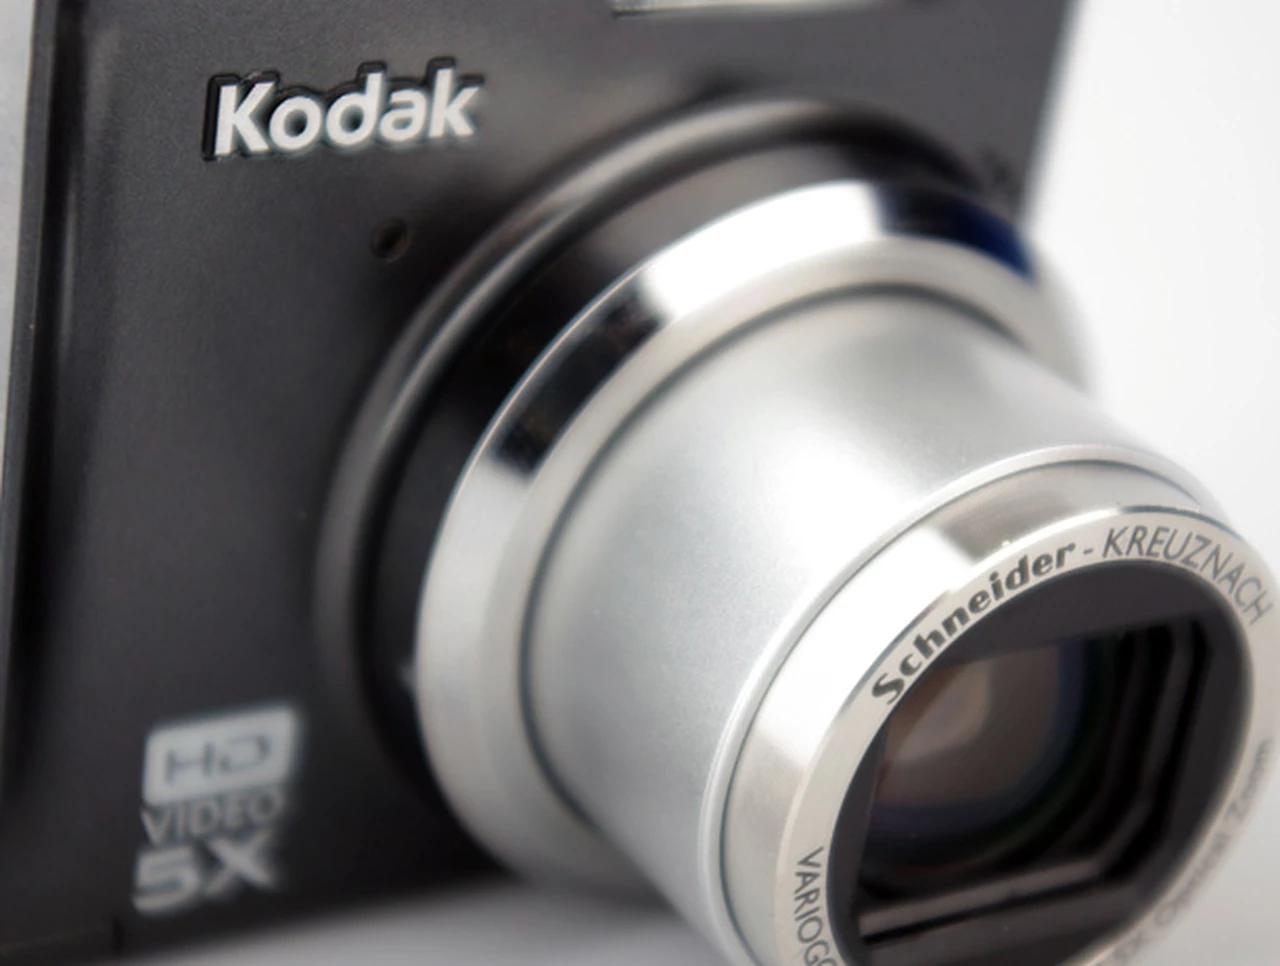 Kodak podrí­a caer en la bancarrota en las próximas semanas